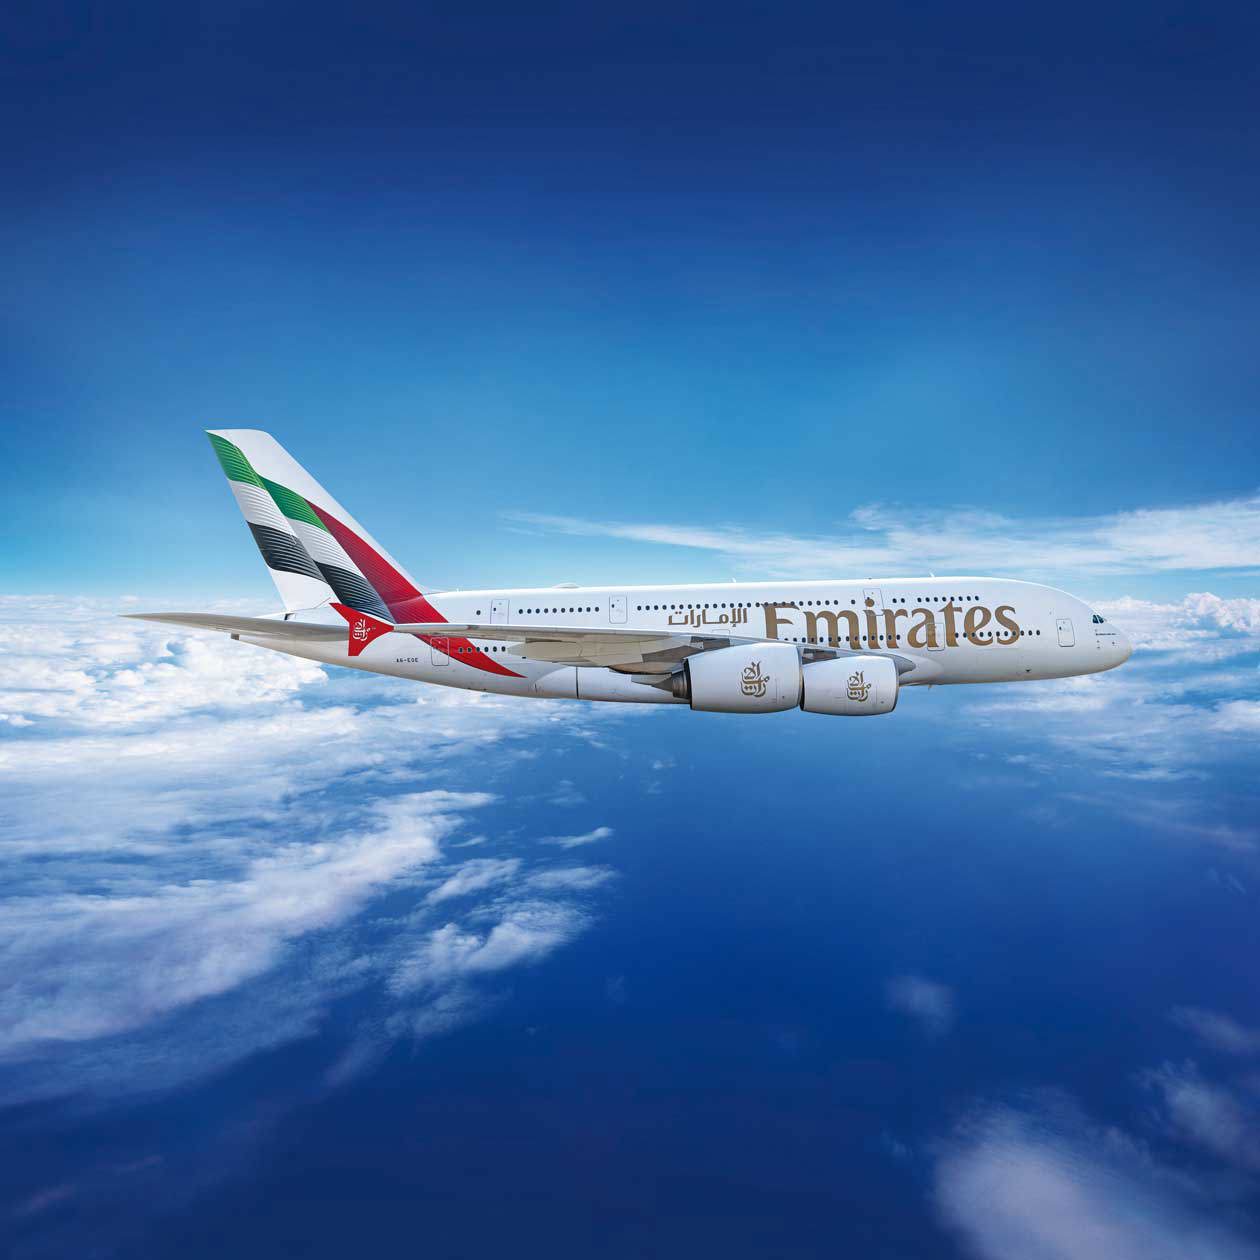 Copyright © Ufficio Stampa Emirates Airlines / The Emirates Group